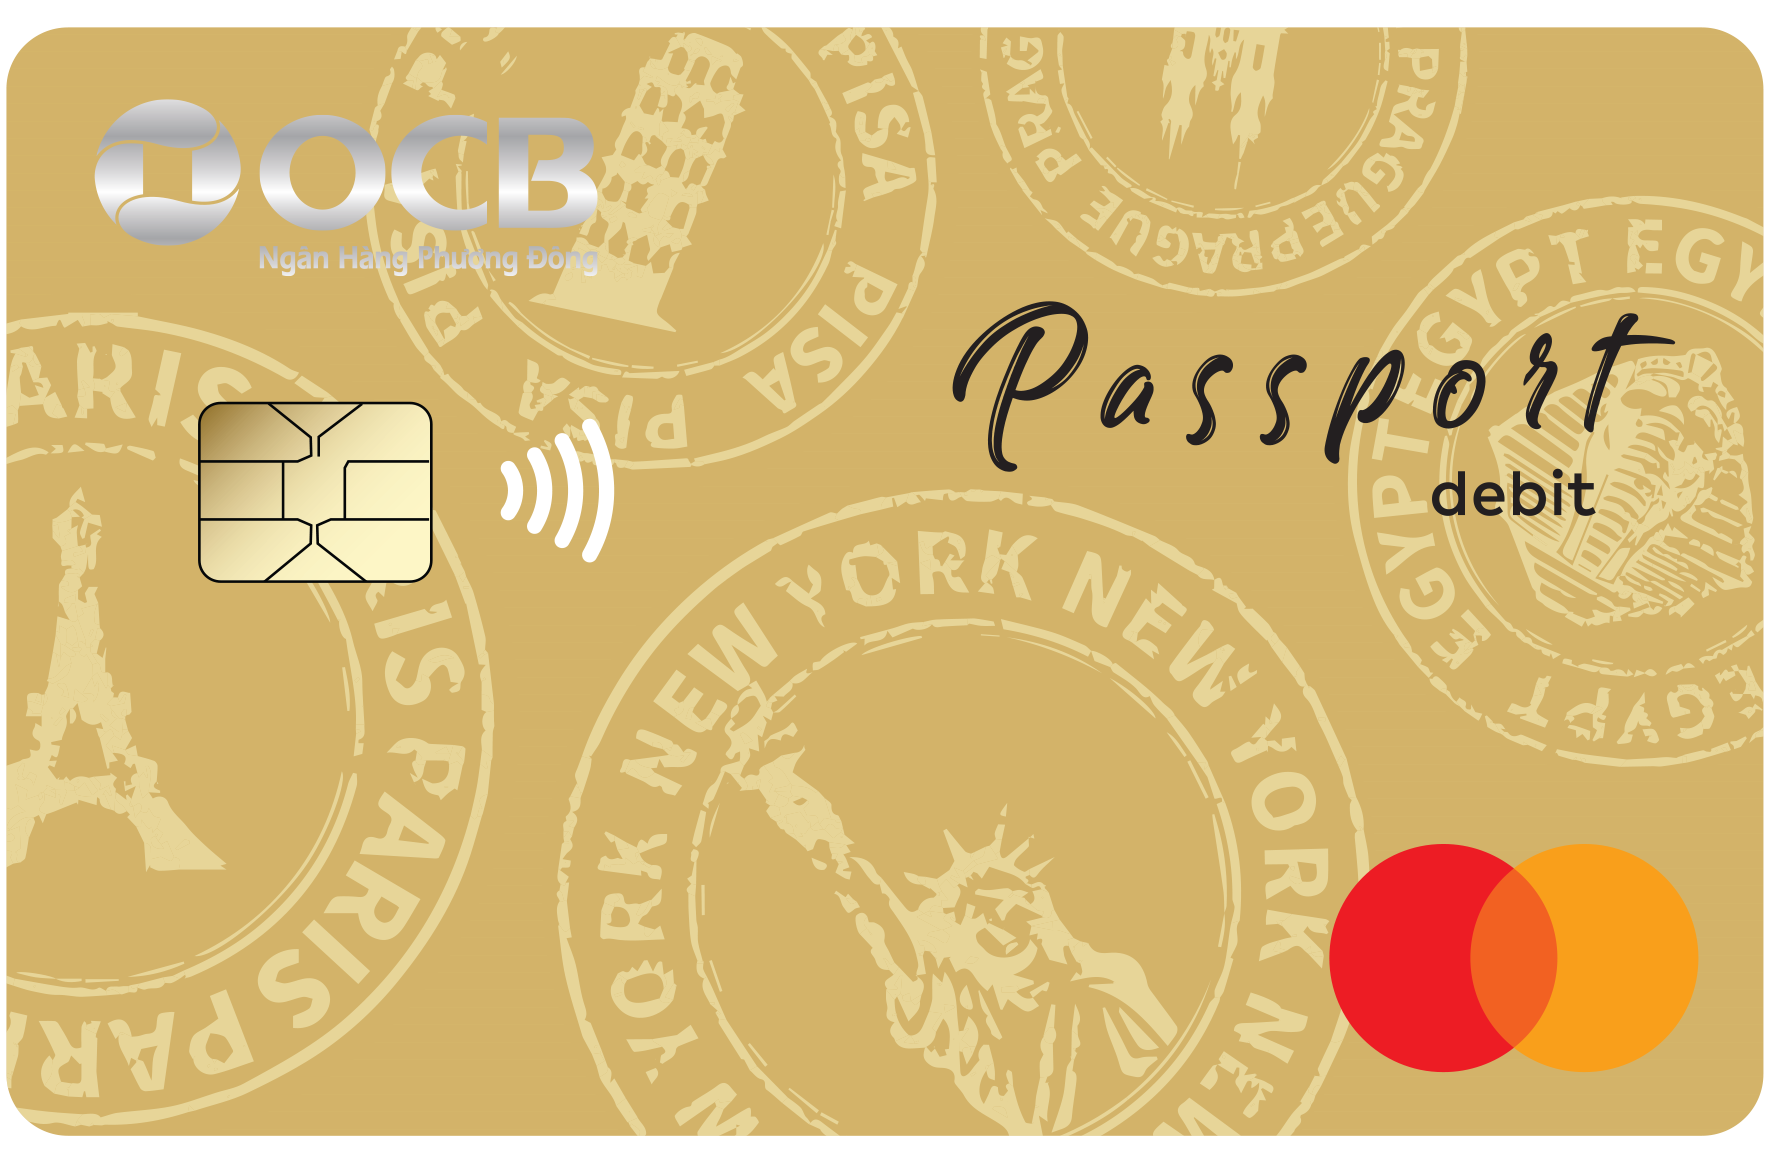 OCB MASTERCARD PASSPORT DEBIT